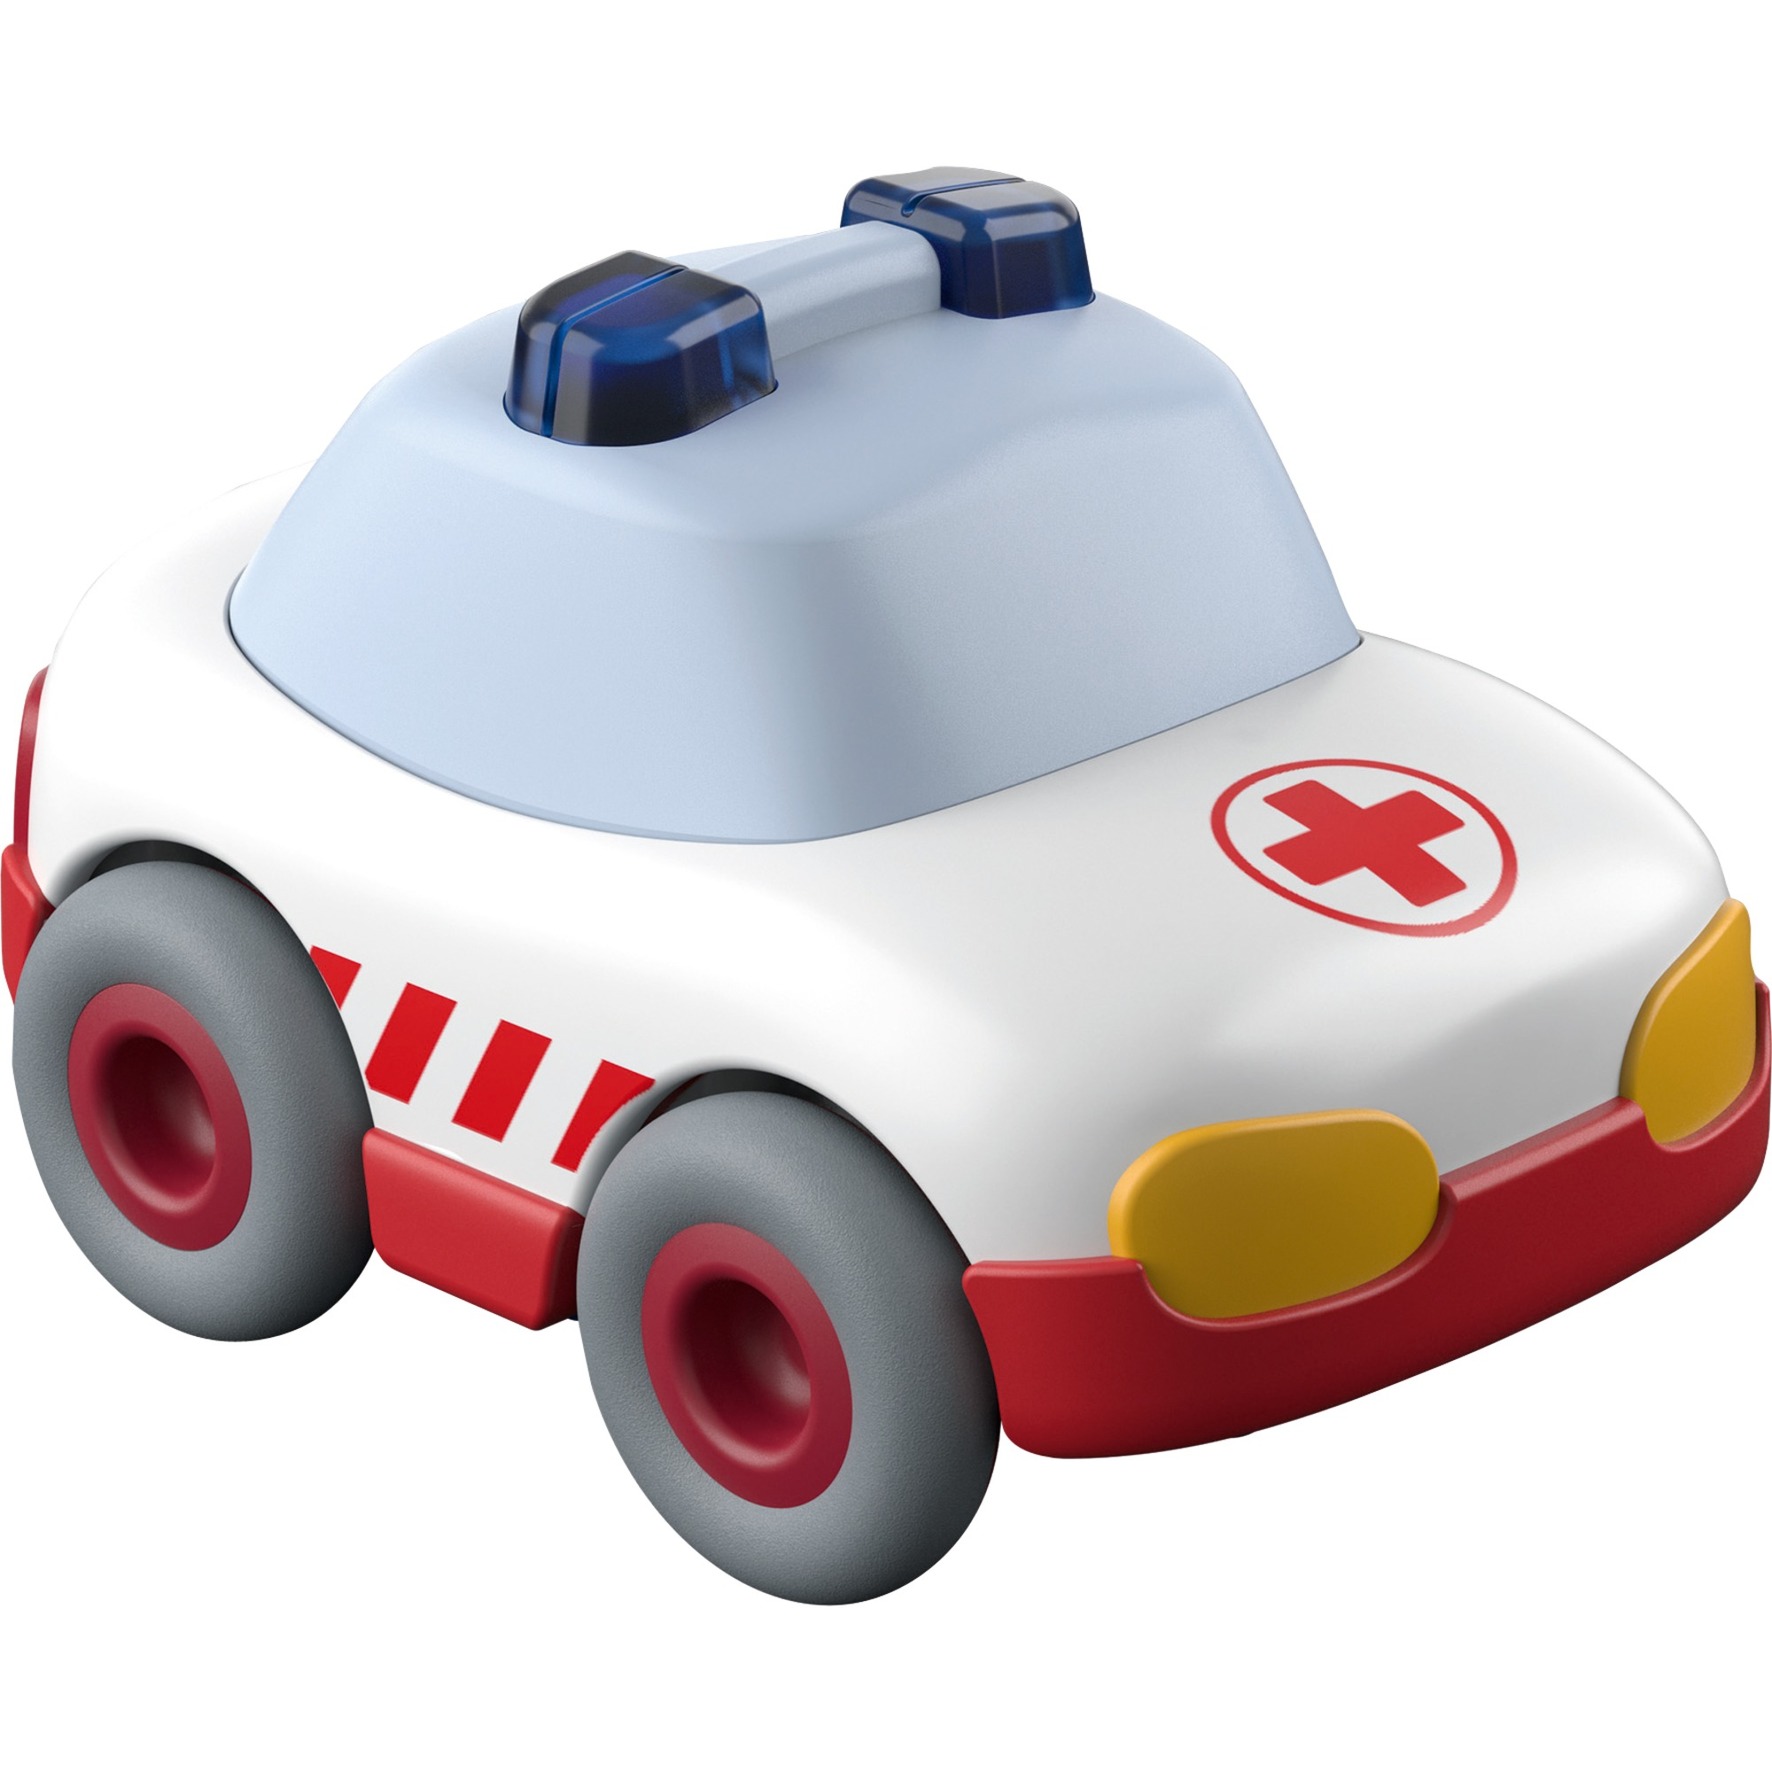 302976, Toy vehicle